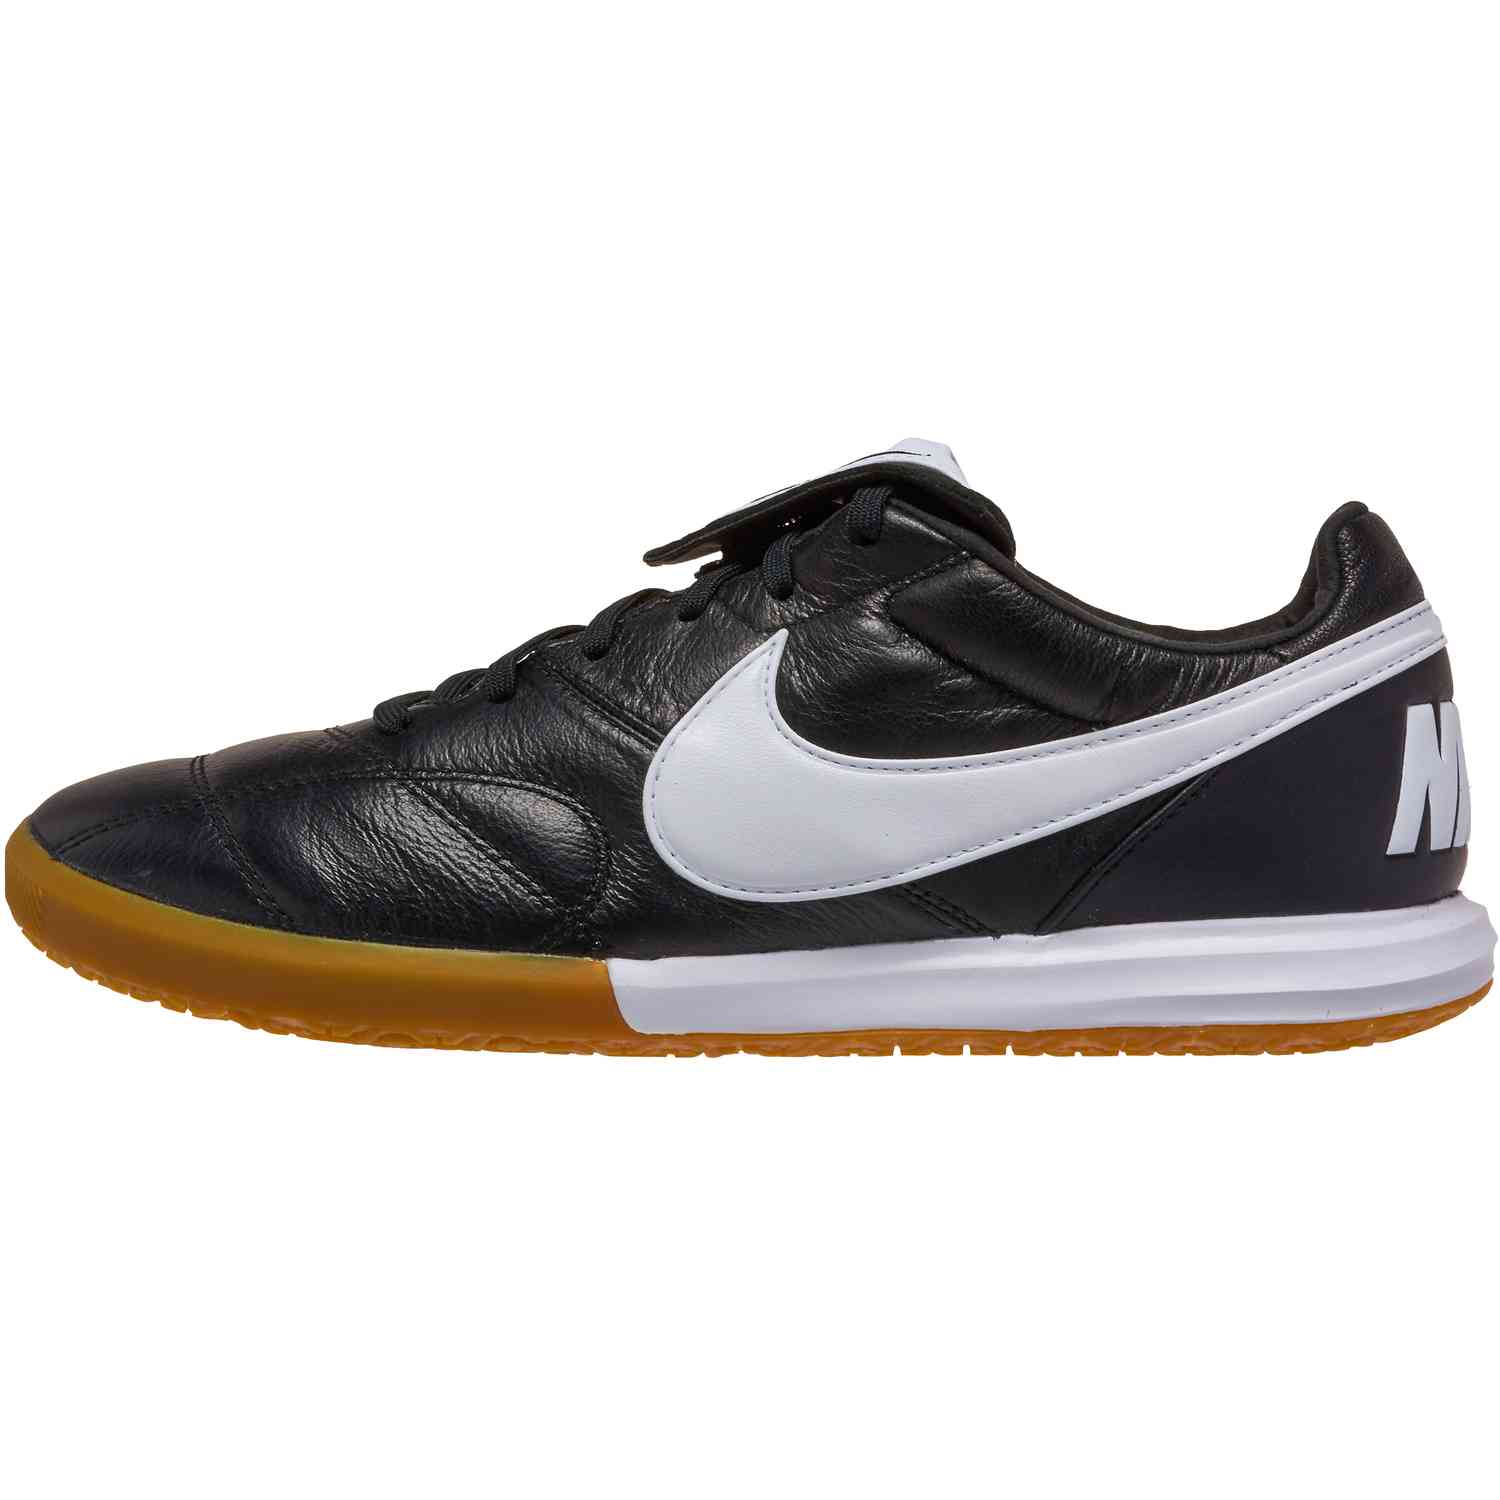 nike premier ii indoor soccer shoes